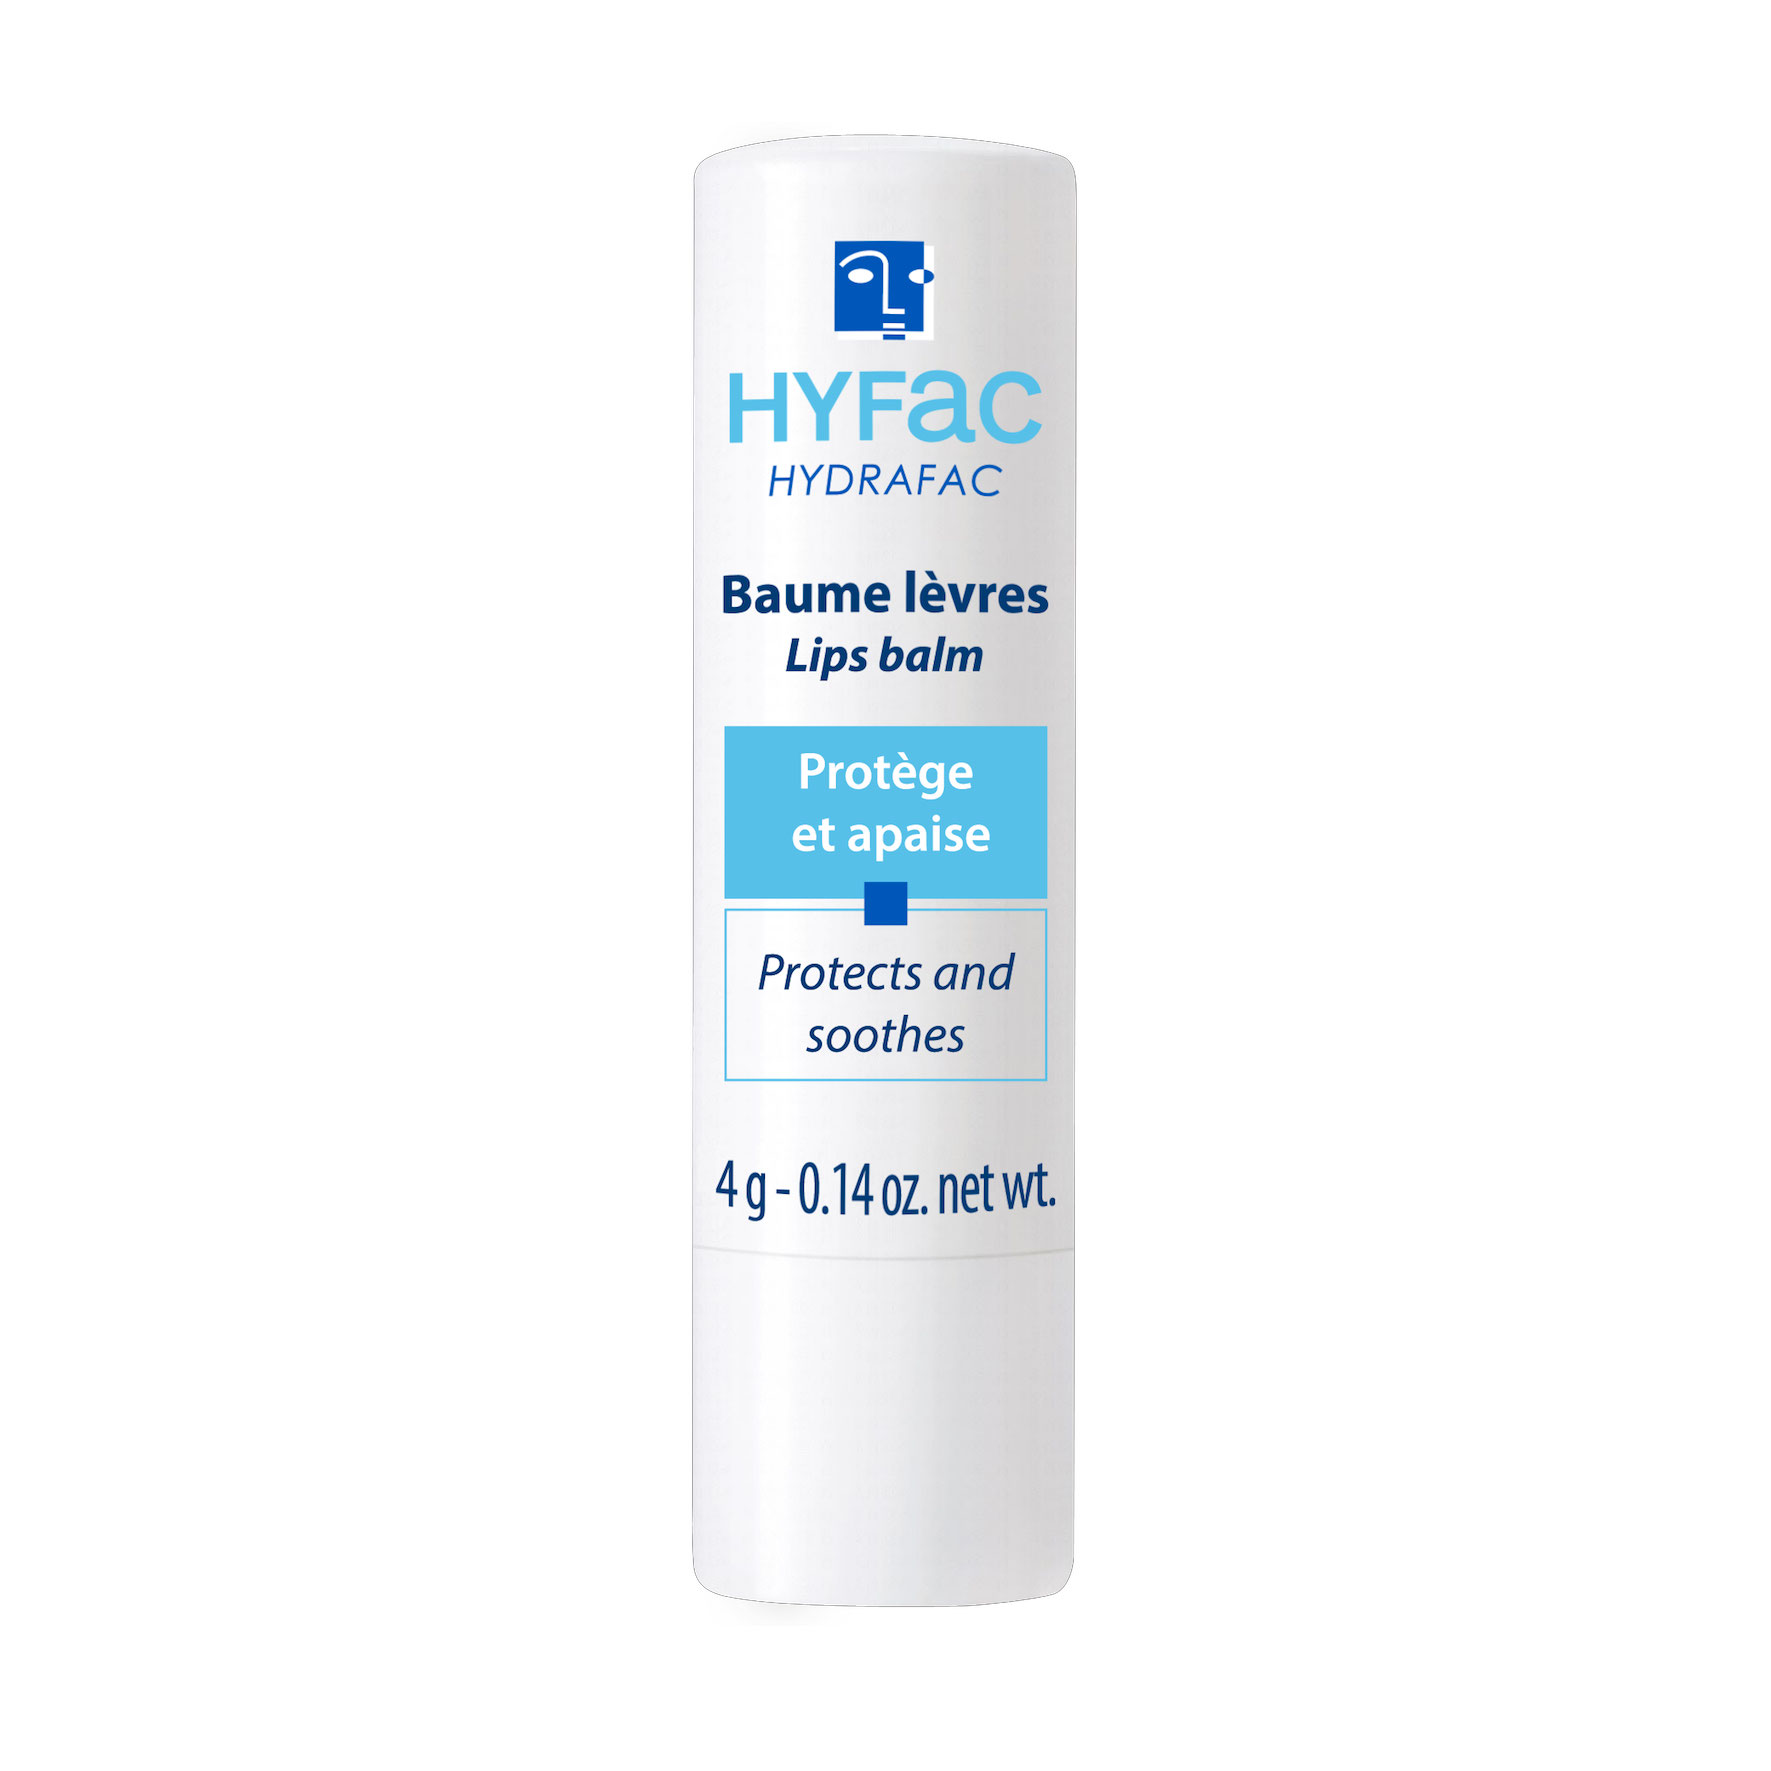 HYDRAFAC Baume lèvres nourissant hydratant